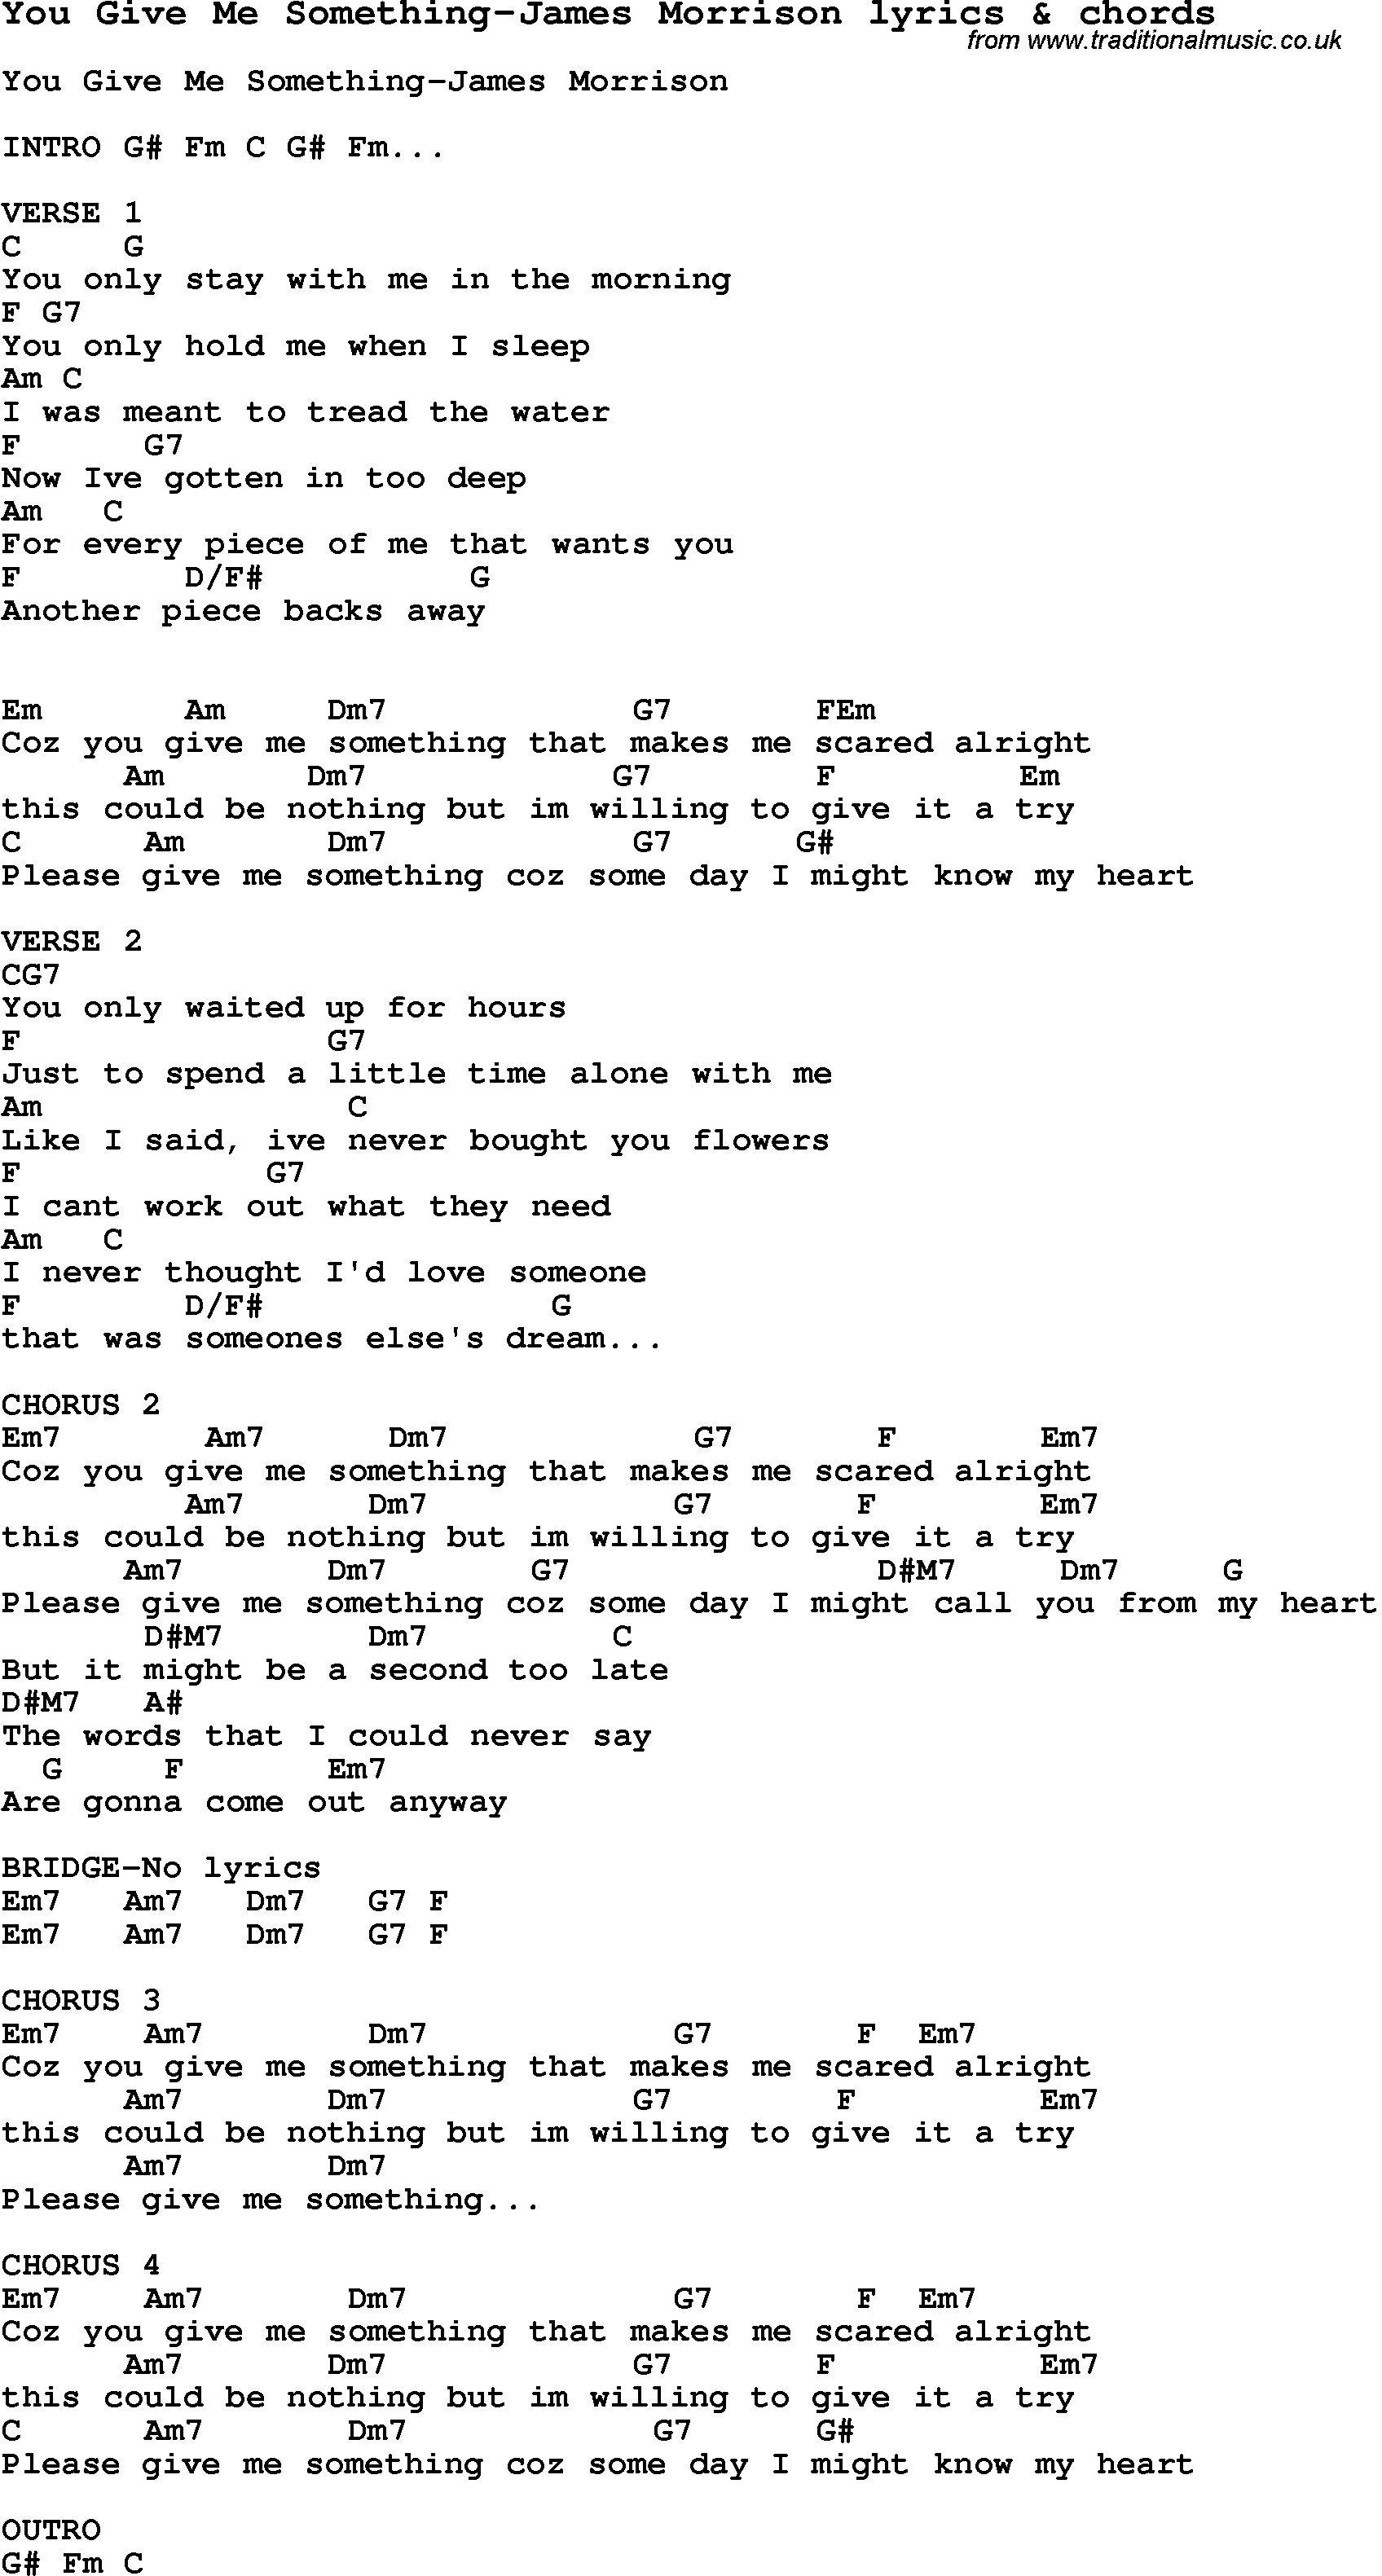 Love Song Lyrics for: You Give Me Something-James Morrison with chords for Ukulele, Guitar Banjo etc.